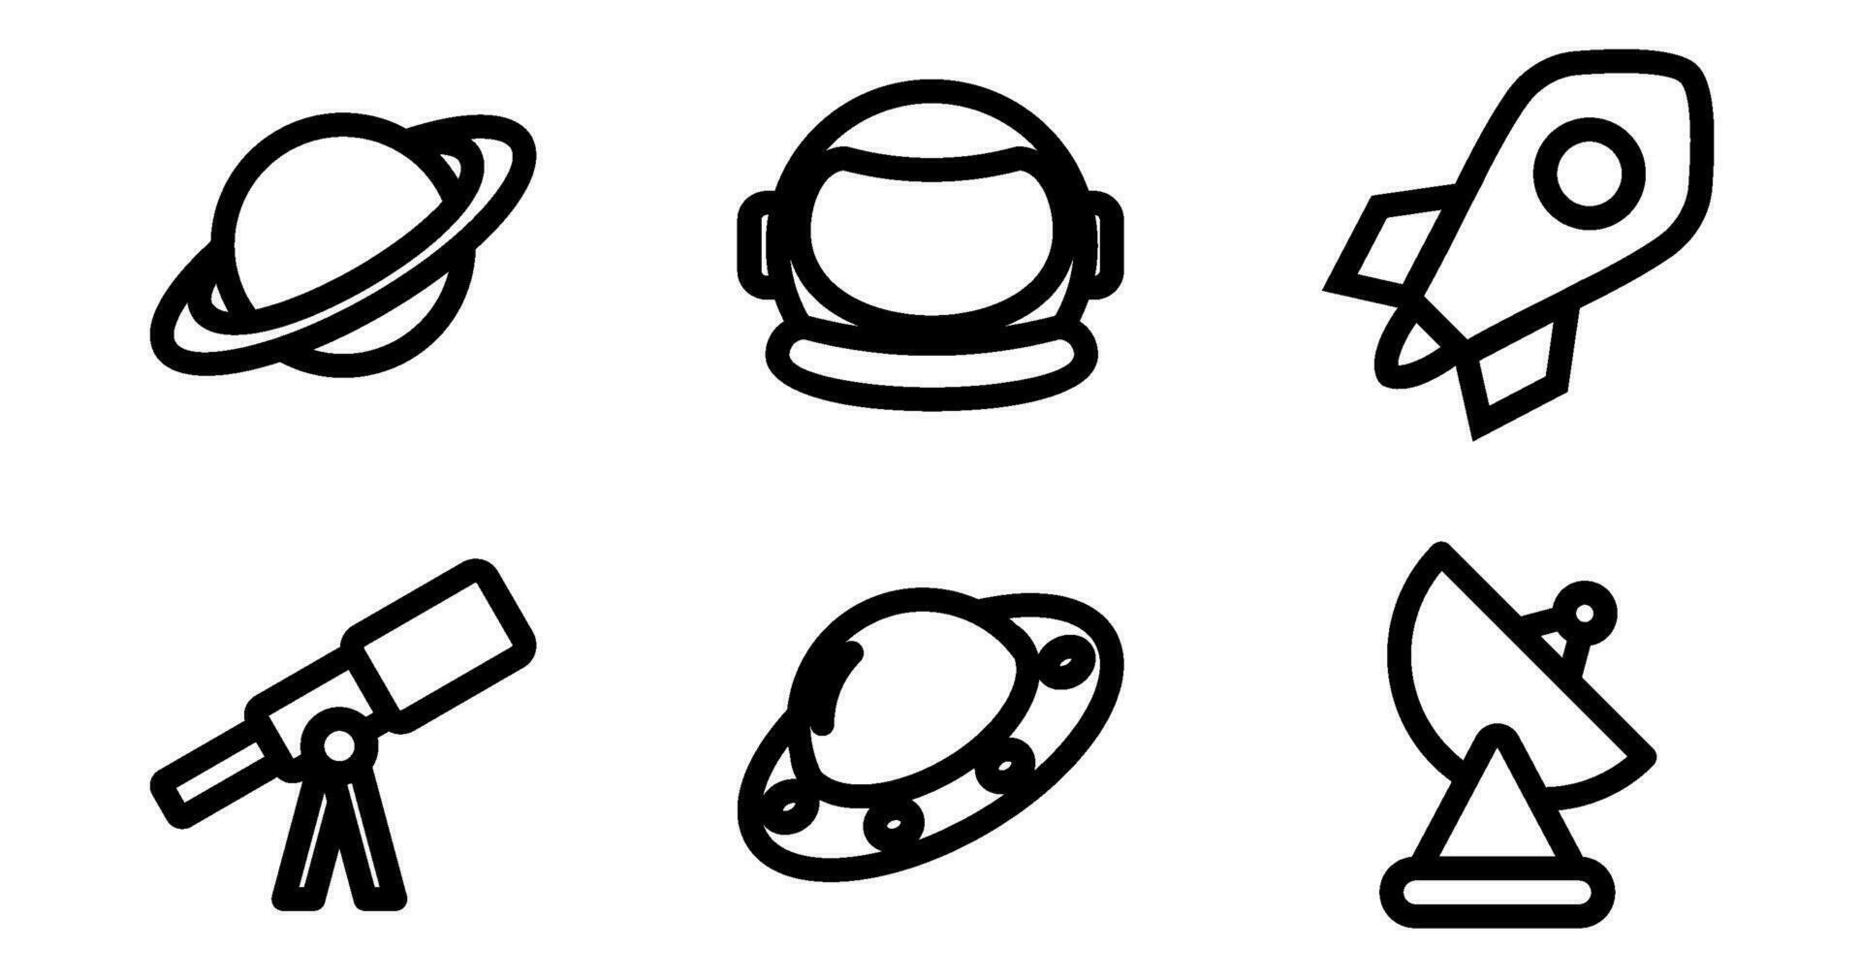 espacio iconos vector gráficos presentando diseños de planeta, cohete, astronauta casco, telescopio, satélite, OVNI. icono conjunto en negrita estilo